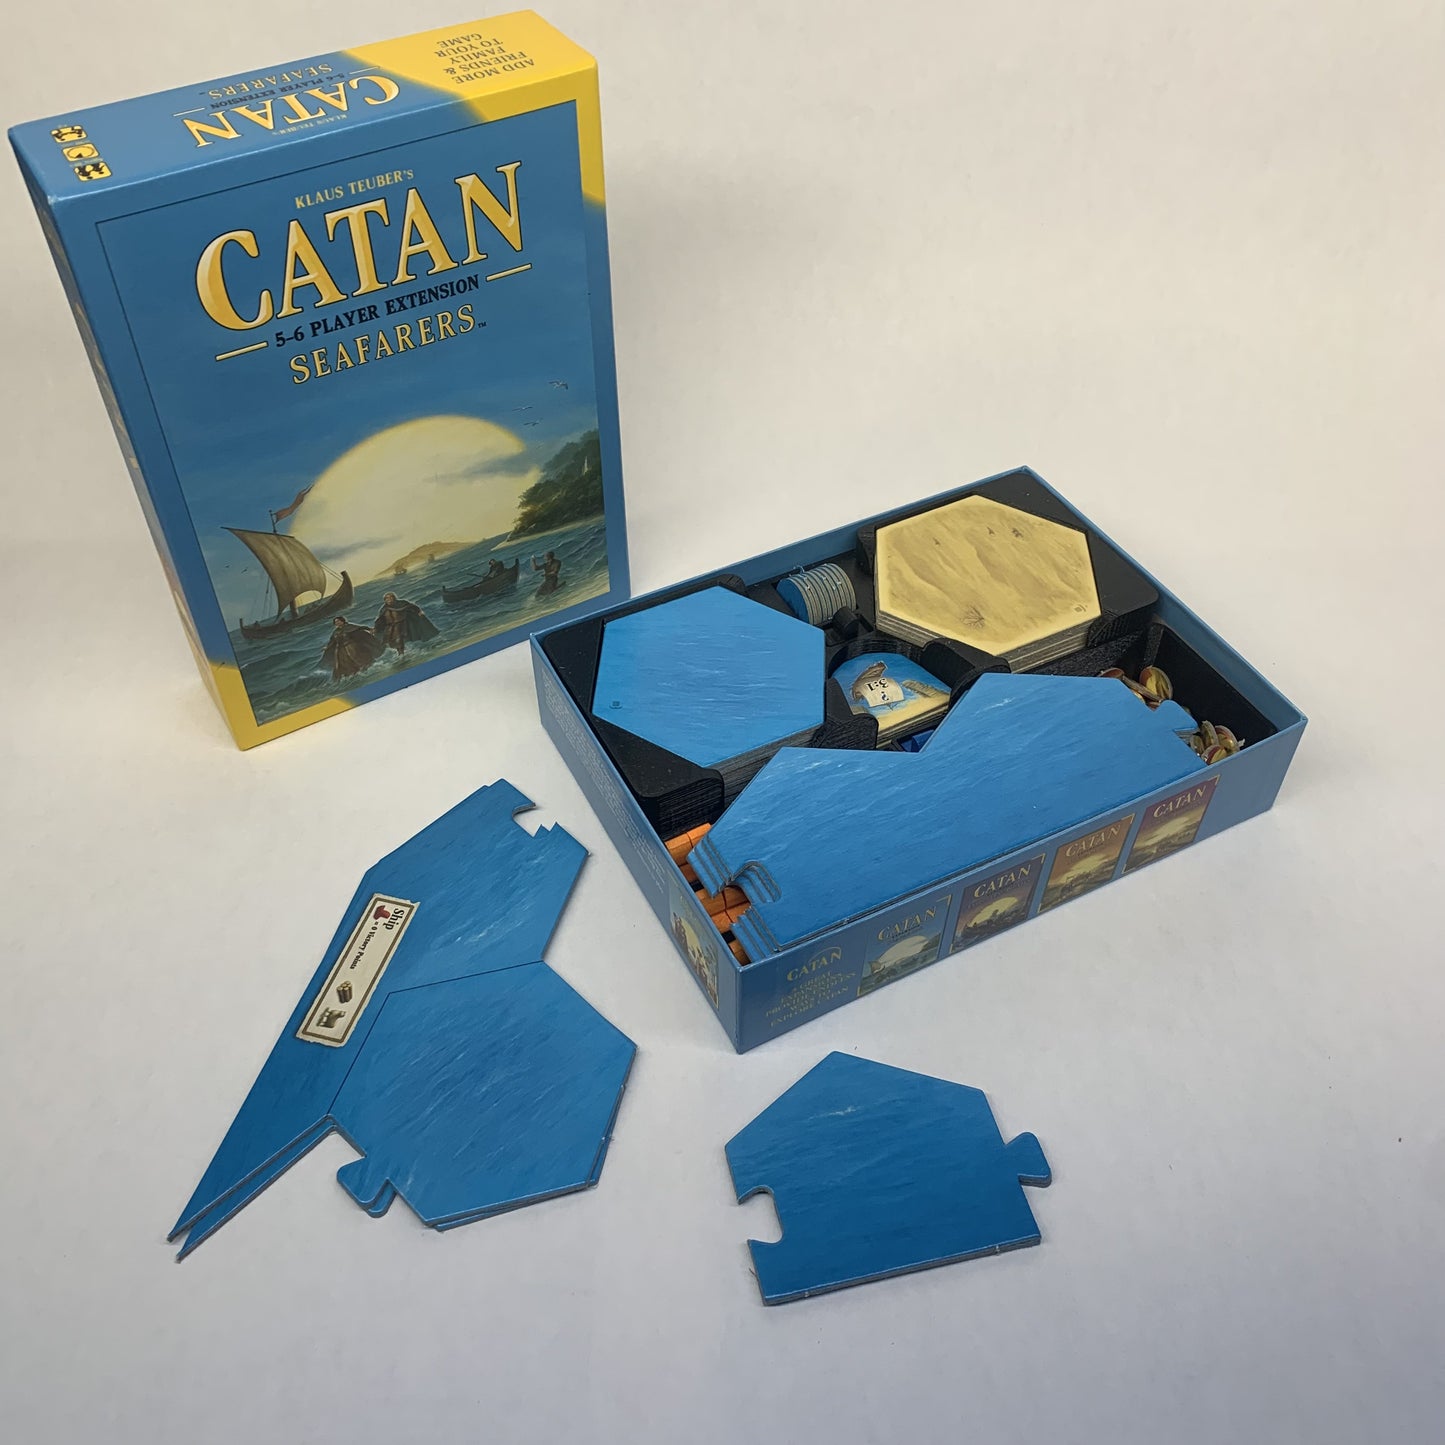 Seafarers Catan Organizer Set | Senac LLC | Compatible with Catan Seafarers Expansion + 5-6 Player Seafarers Extension | Strategy Board Game